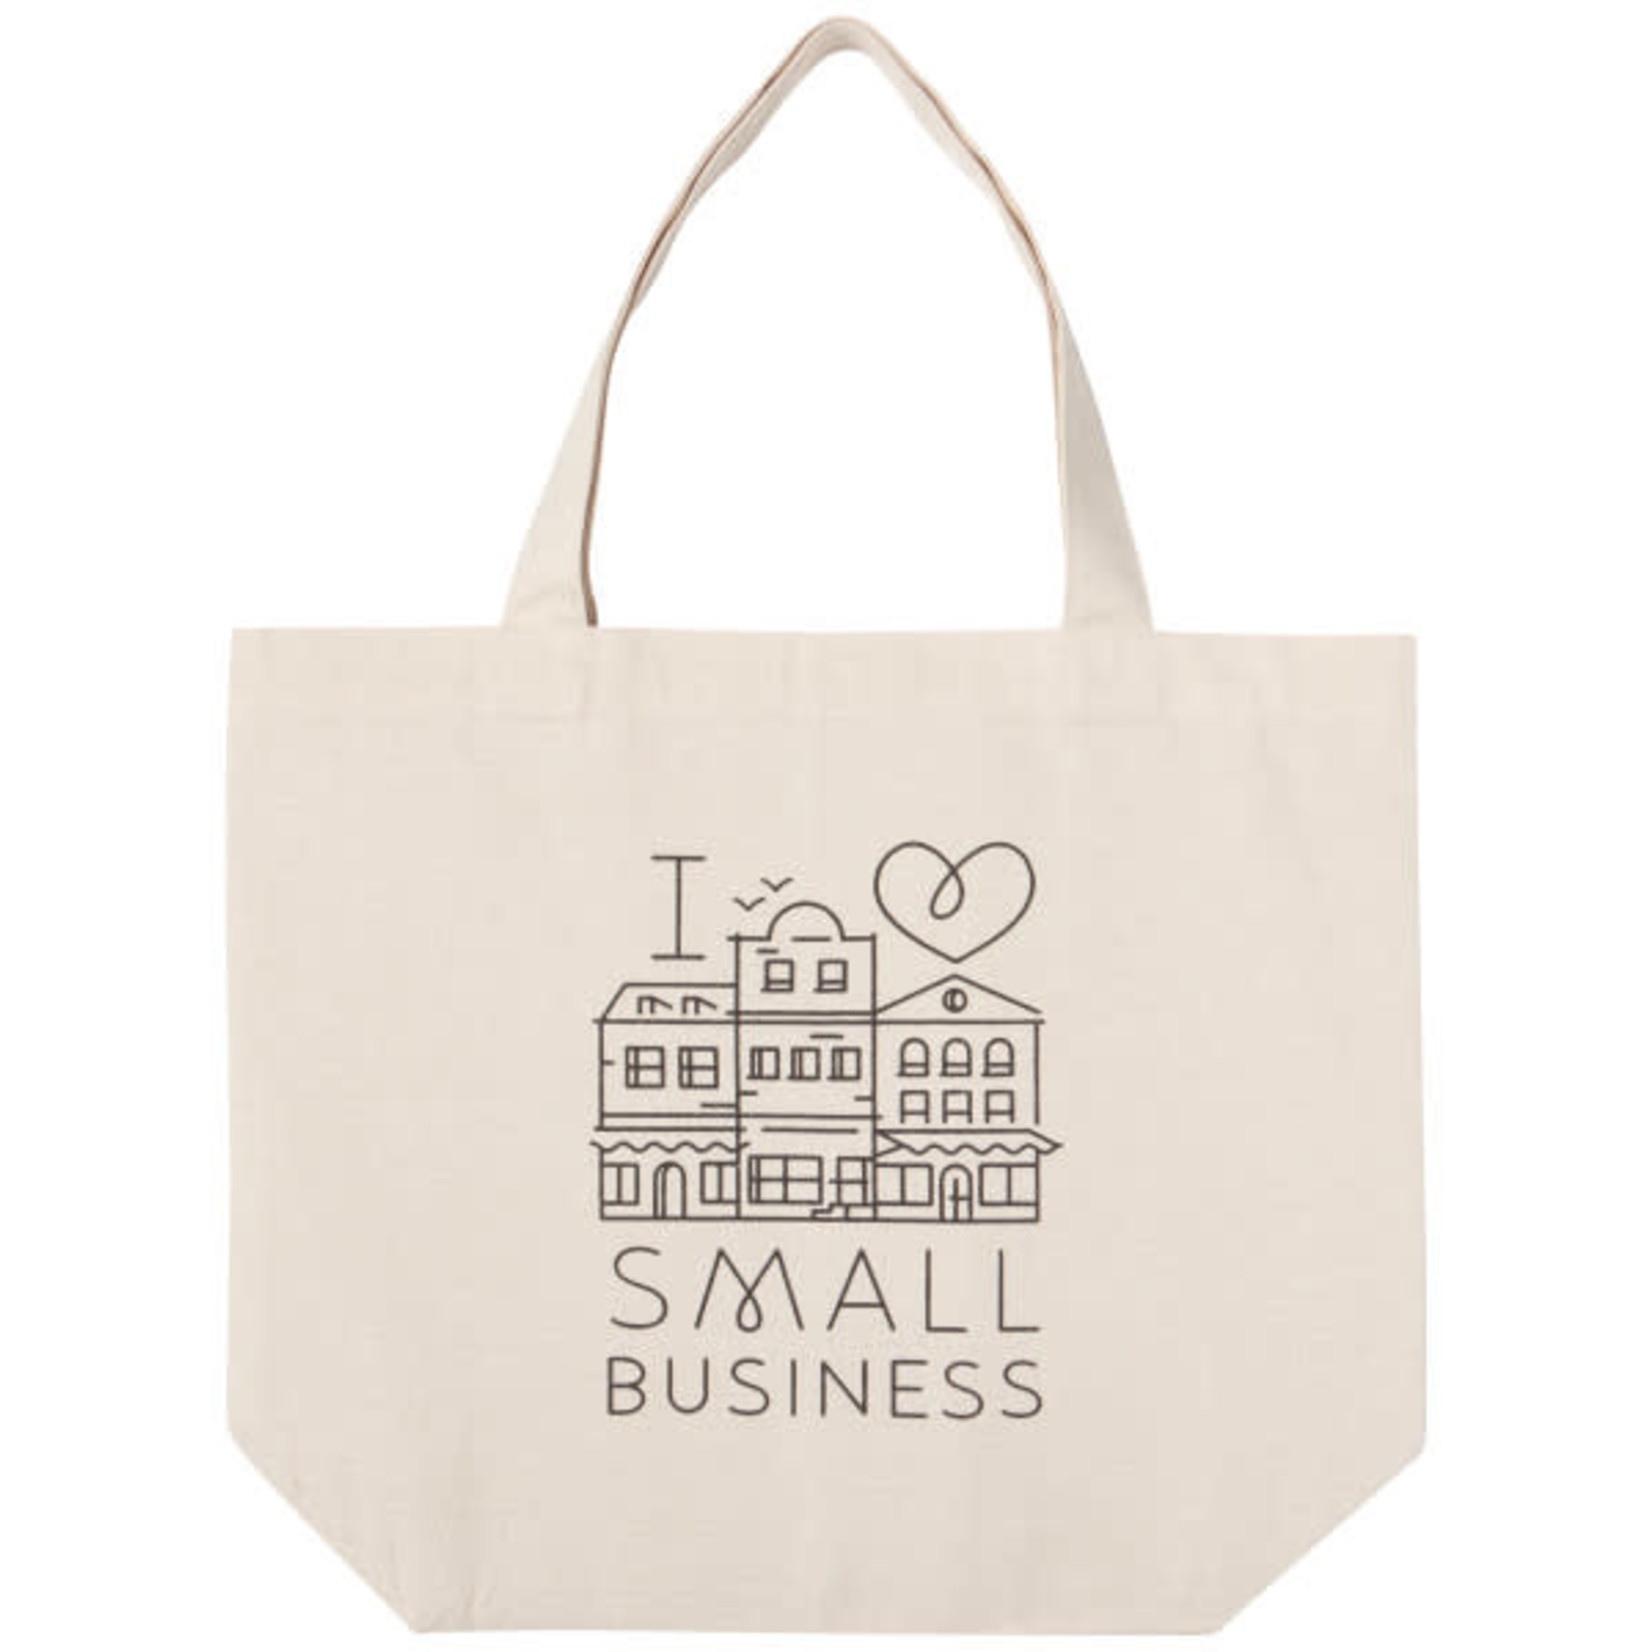 Danica Studios Tote Bag - Small Business